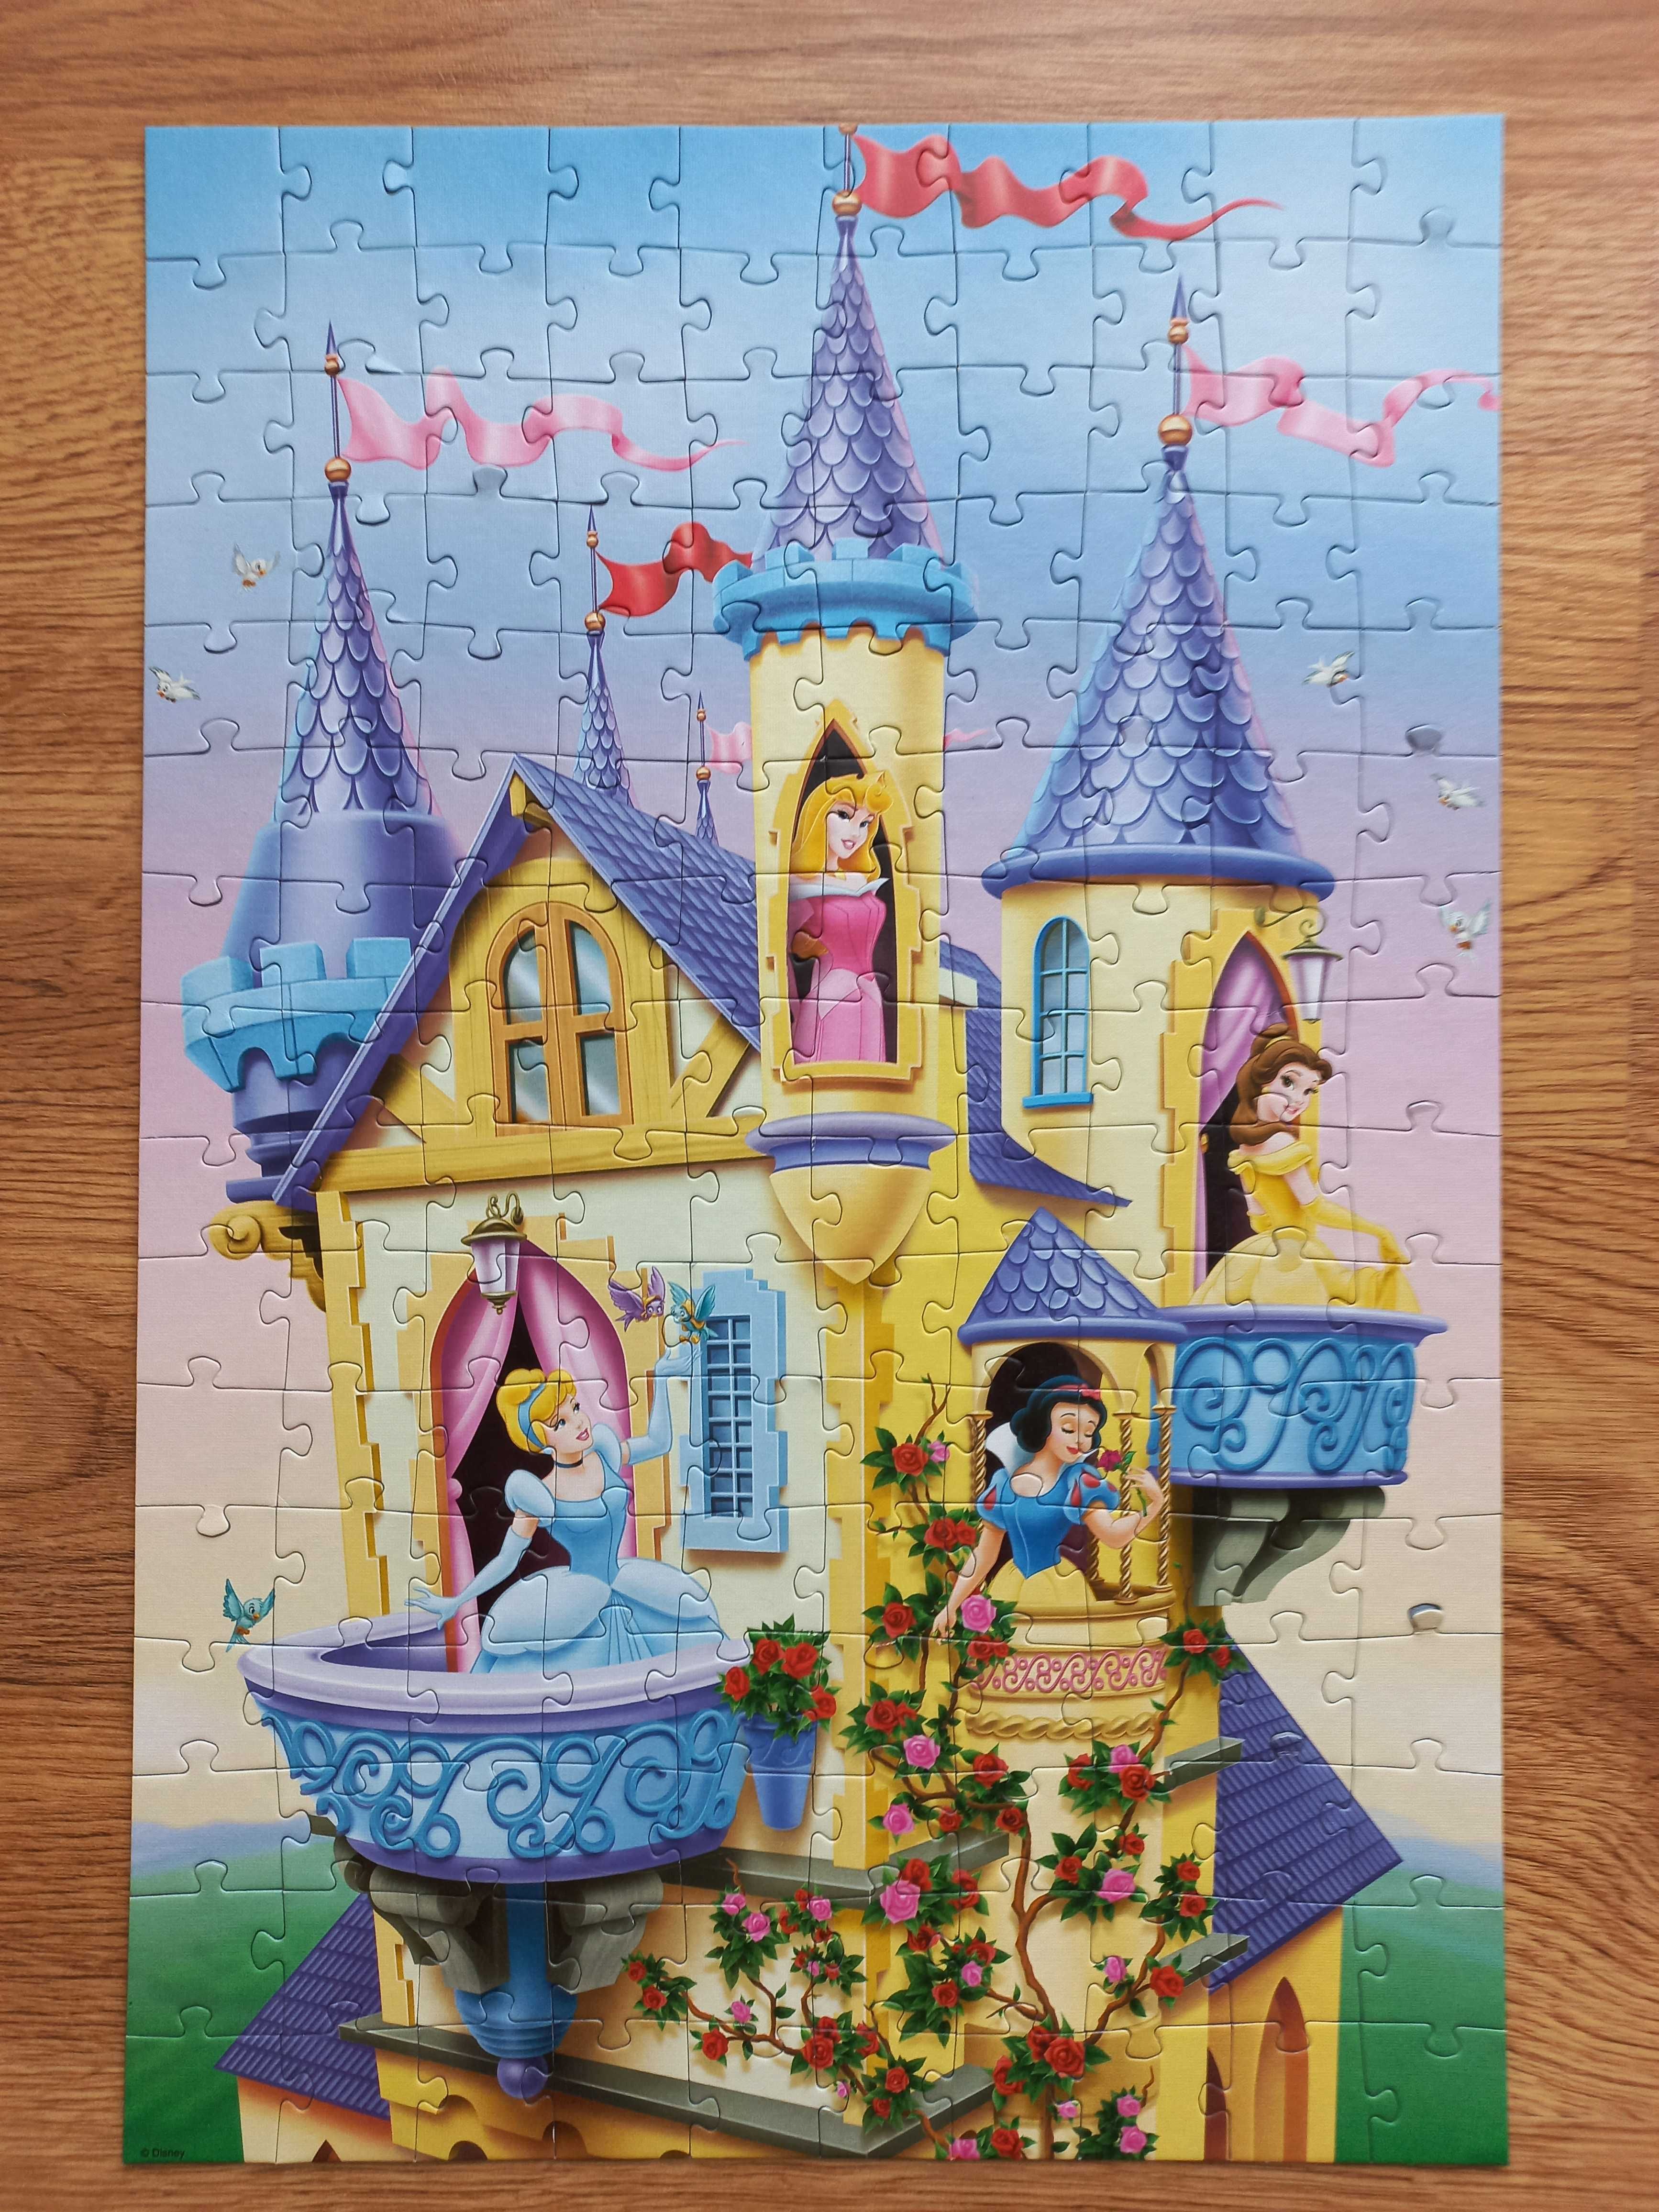 Puzzle Trefl Królewna Śnieżka 2w1 100el i 70el + Księżniczki 160el